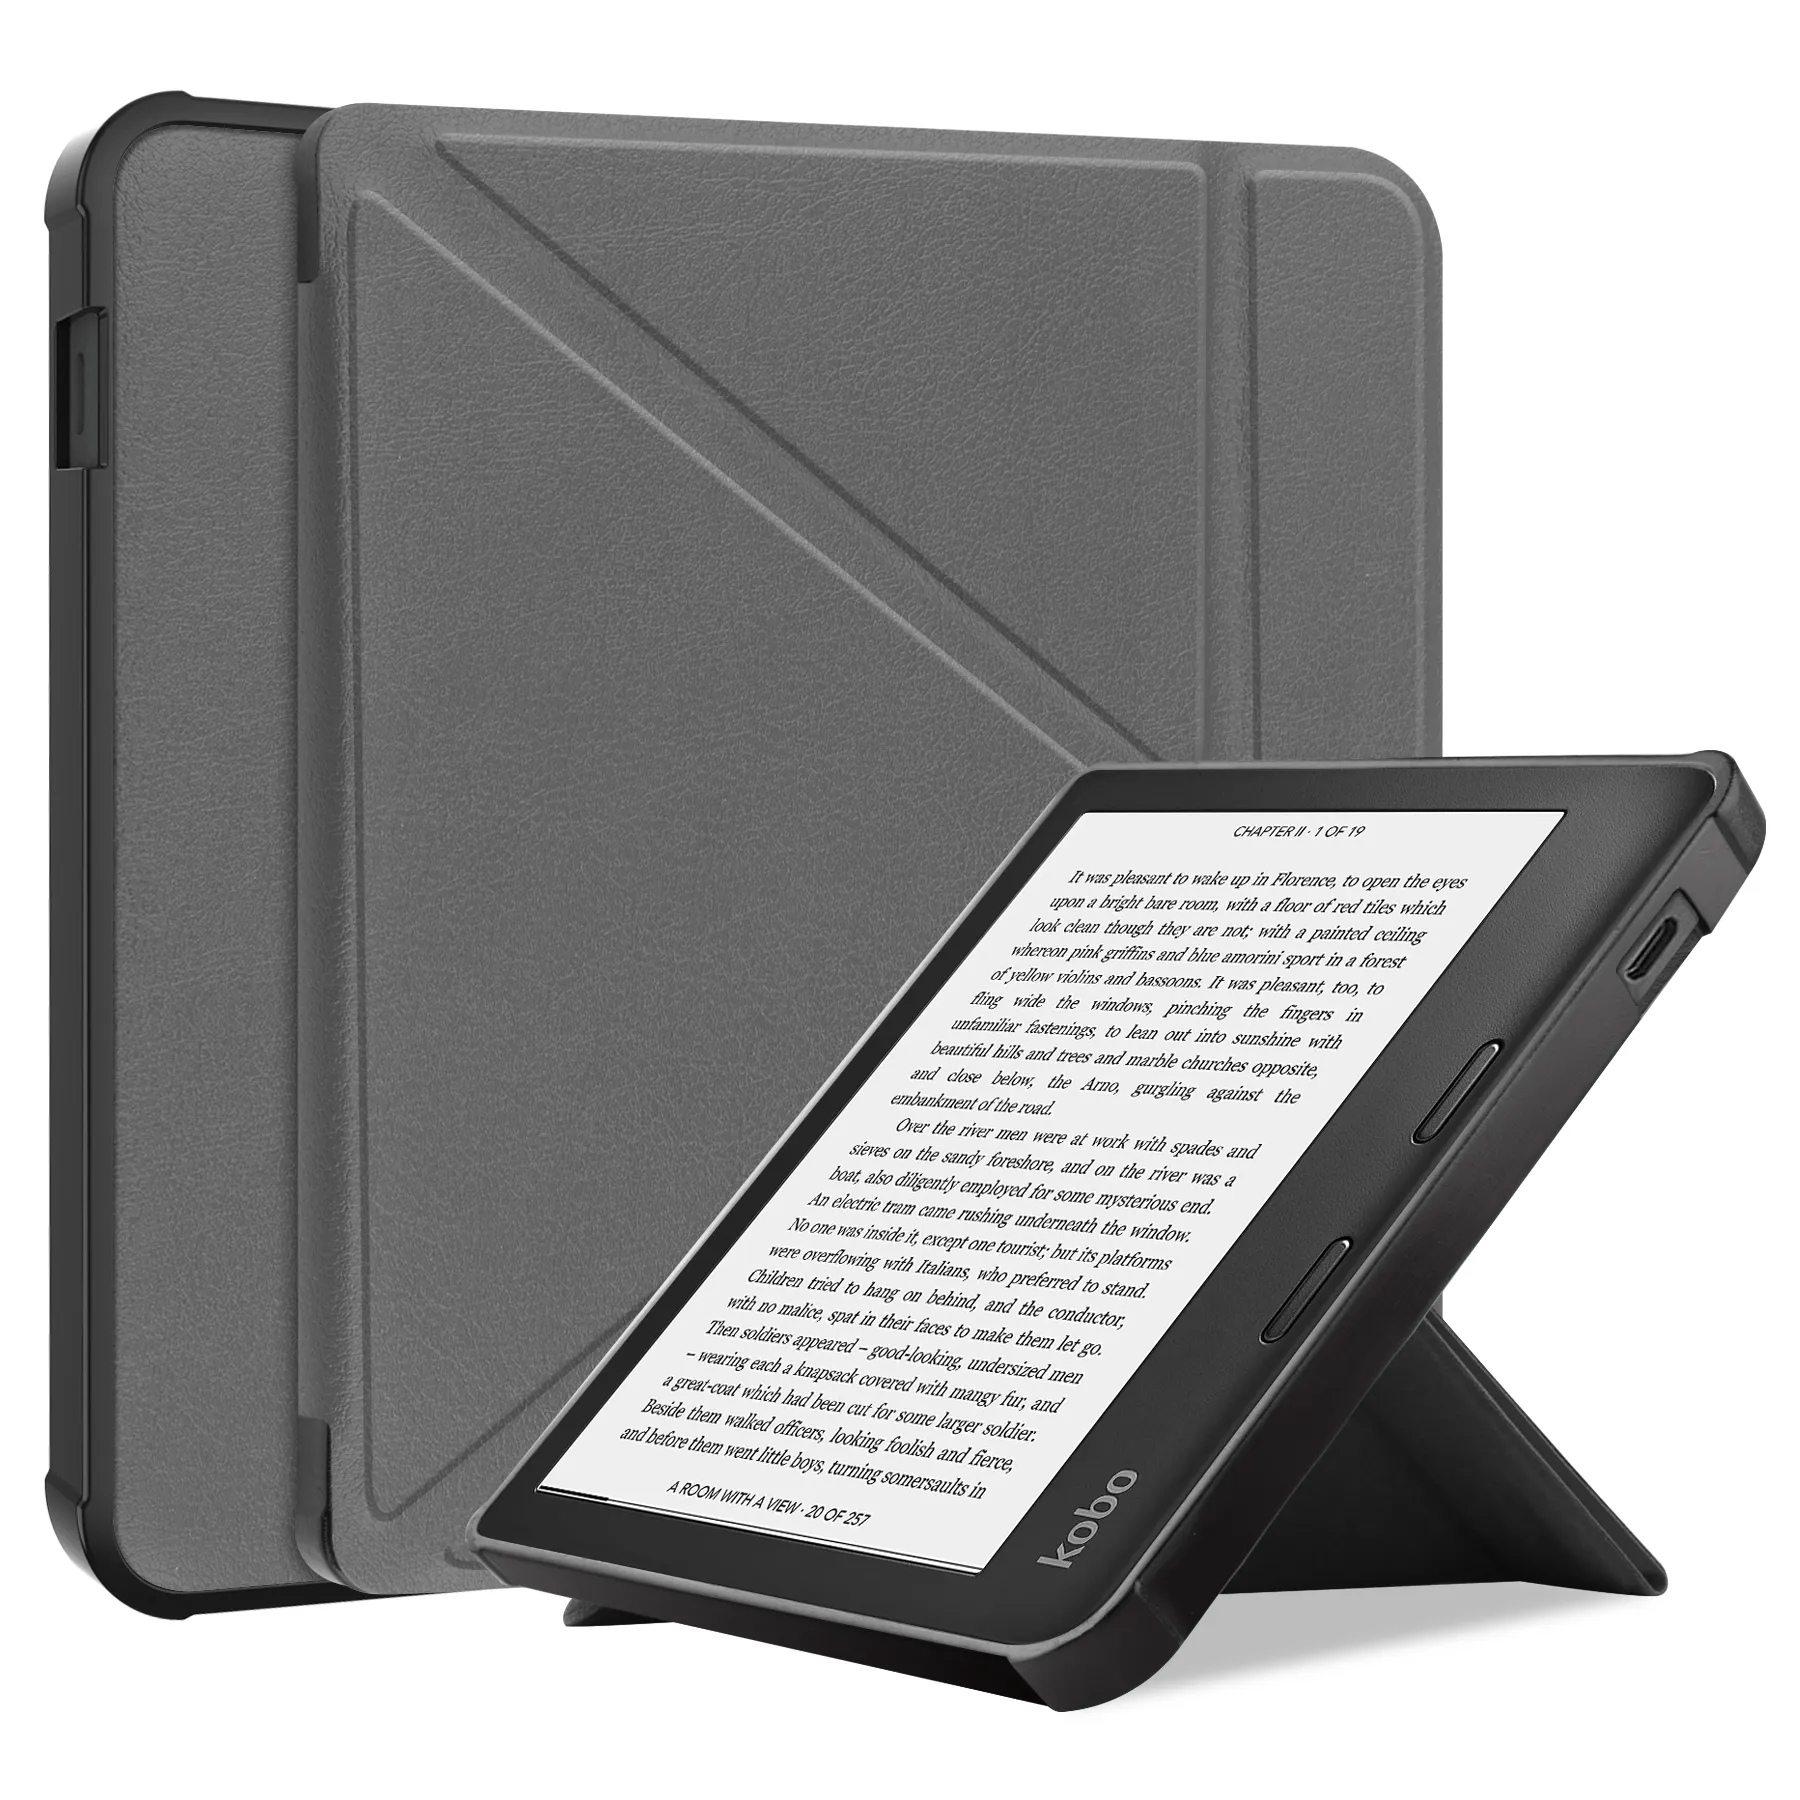 Capa magnética de couro de luxo de fábrica, cobertura de tablet tpu macia e silicone para leitura, kobo liva 2